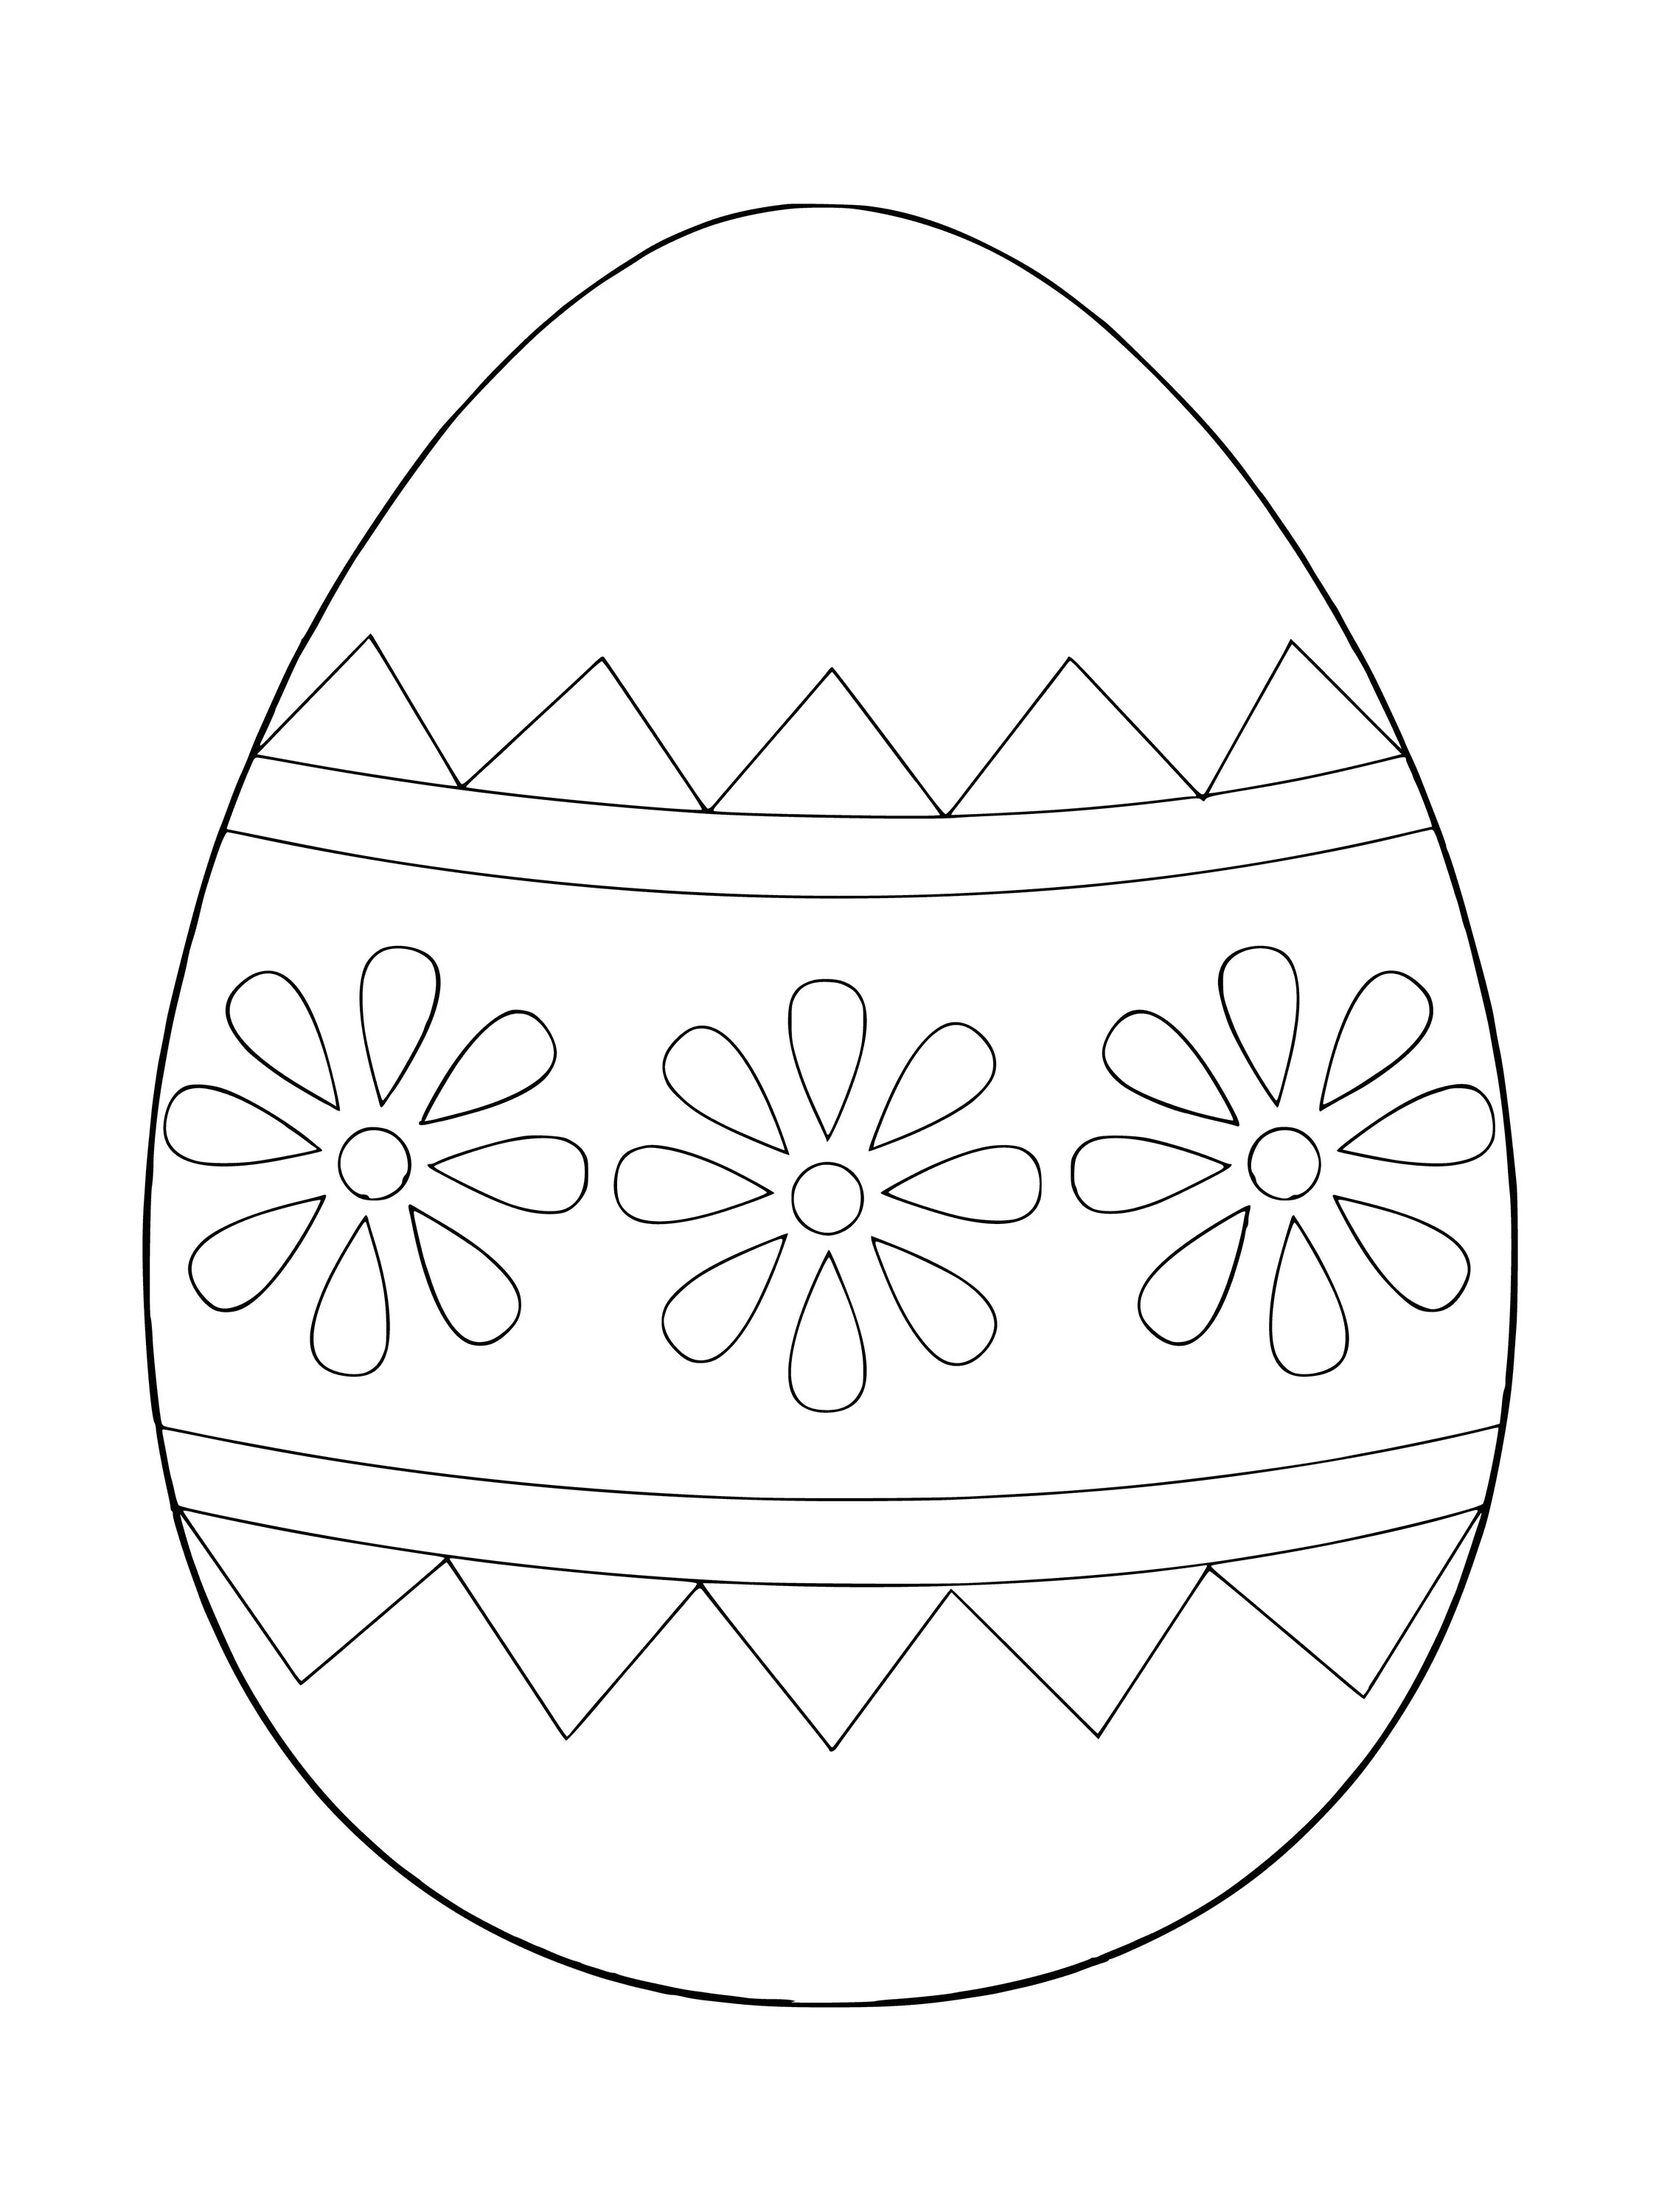 Пасхальное яйцо раскраска для детей. Яйцо пасхальное раскраска для детей шаблоны. Раскраски пасочных яиц. Трафареты пасхальных яиц для раскрашивания. Шаблон пасхального яйца для вырезания